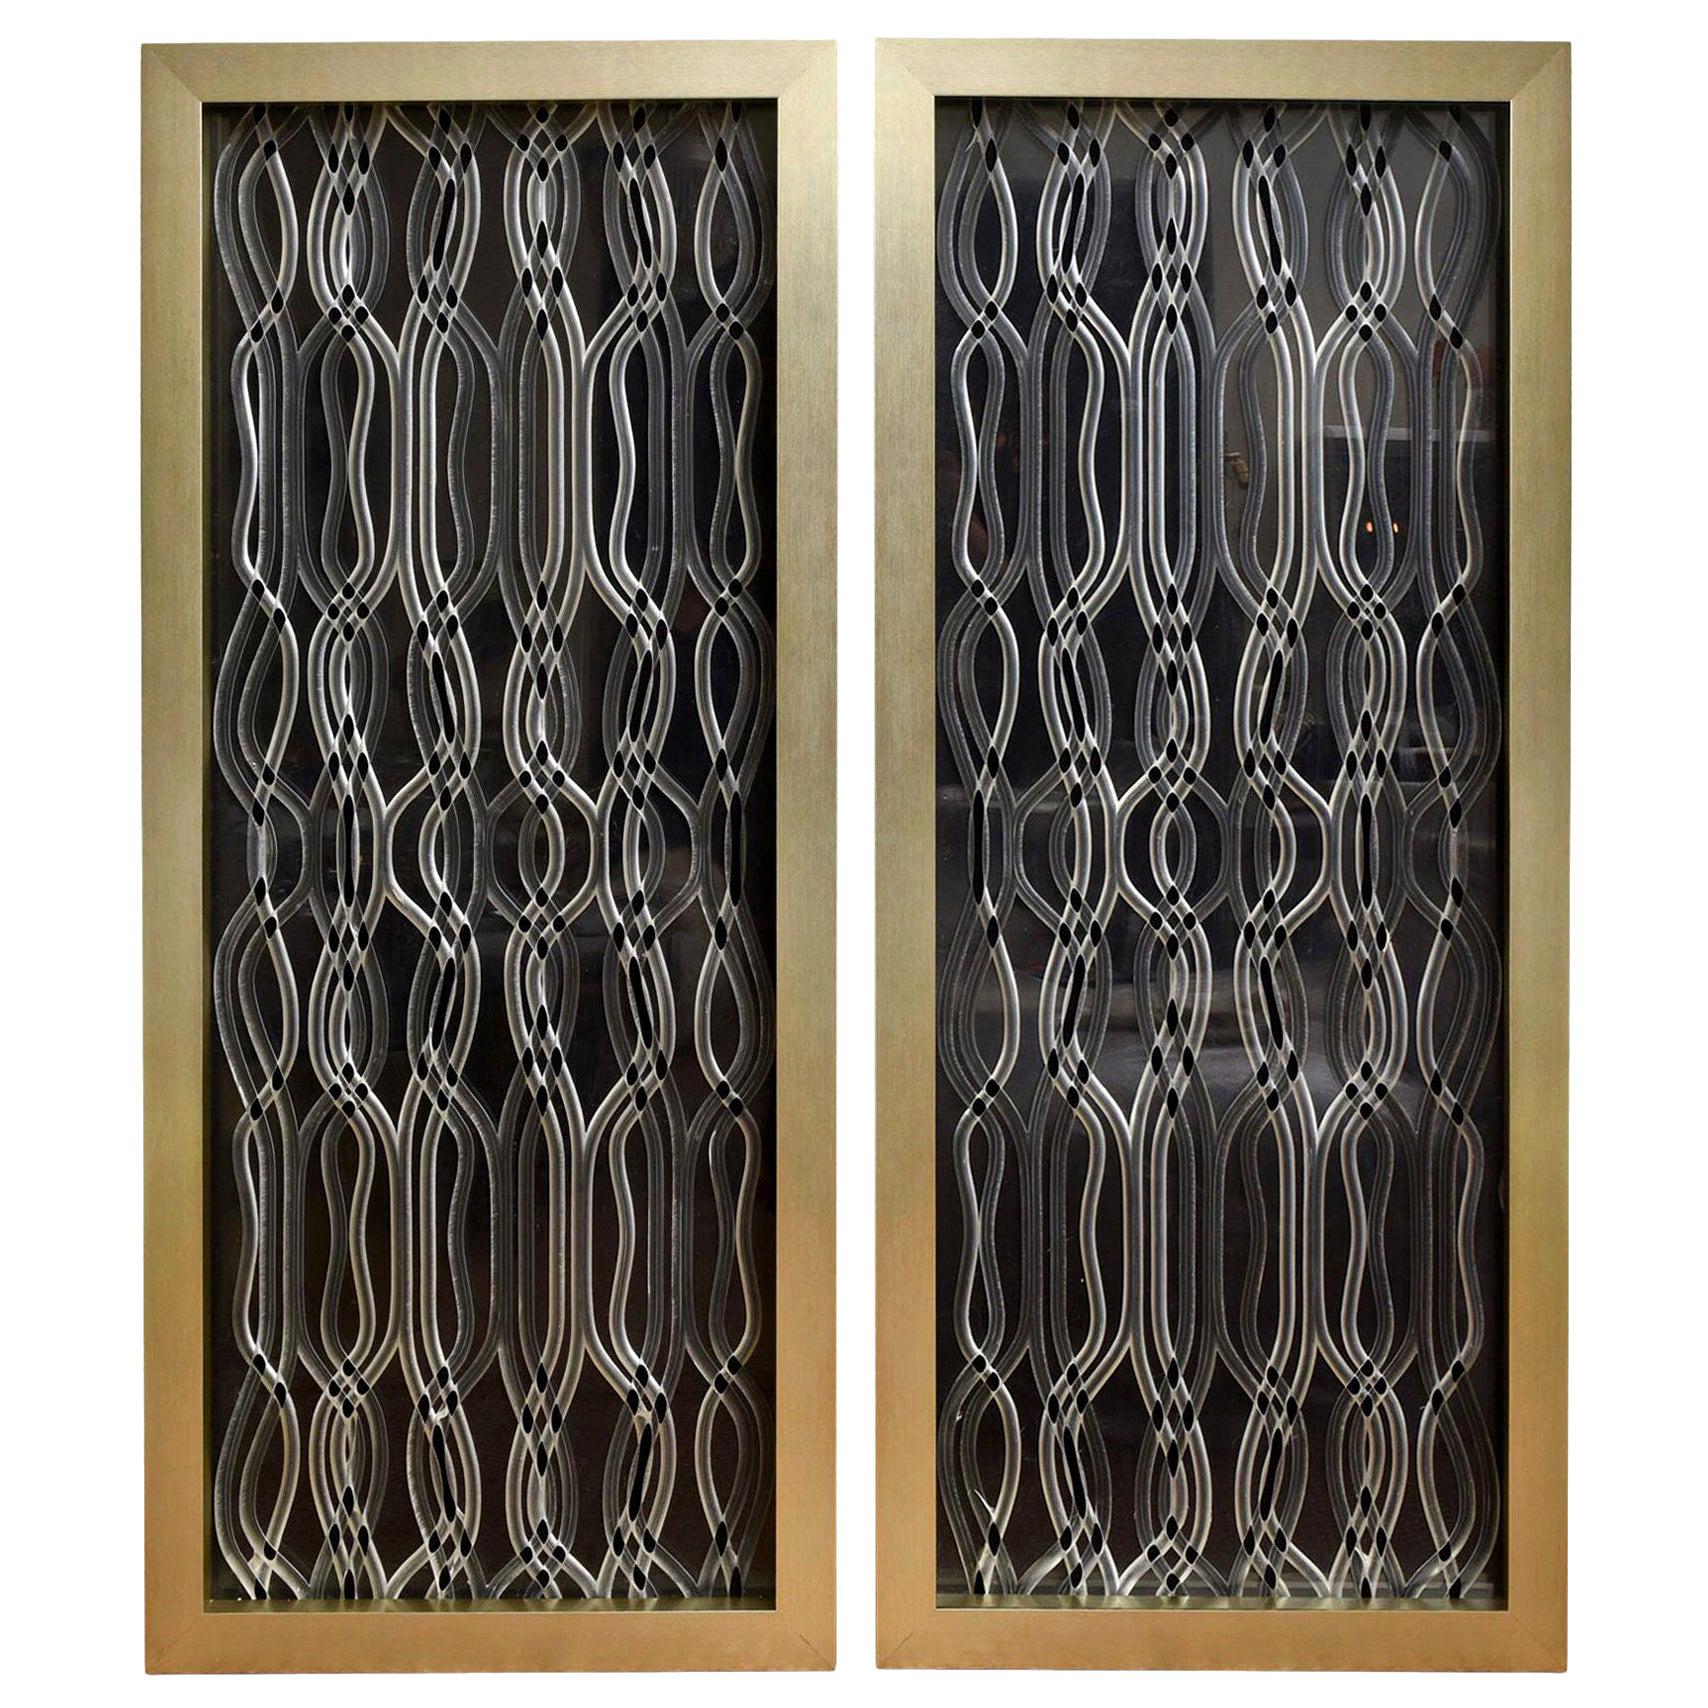 Lucite Dimensional Sculptural Panels Custom Framed Pair of Vintage